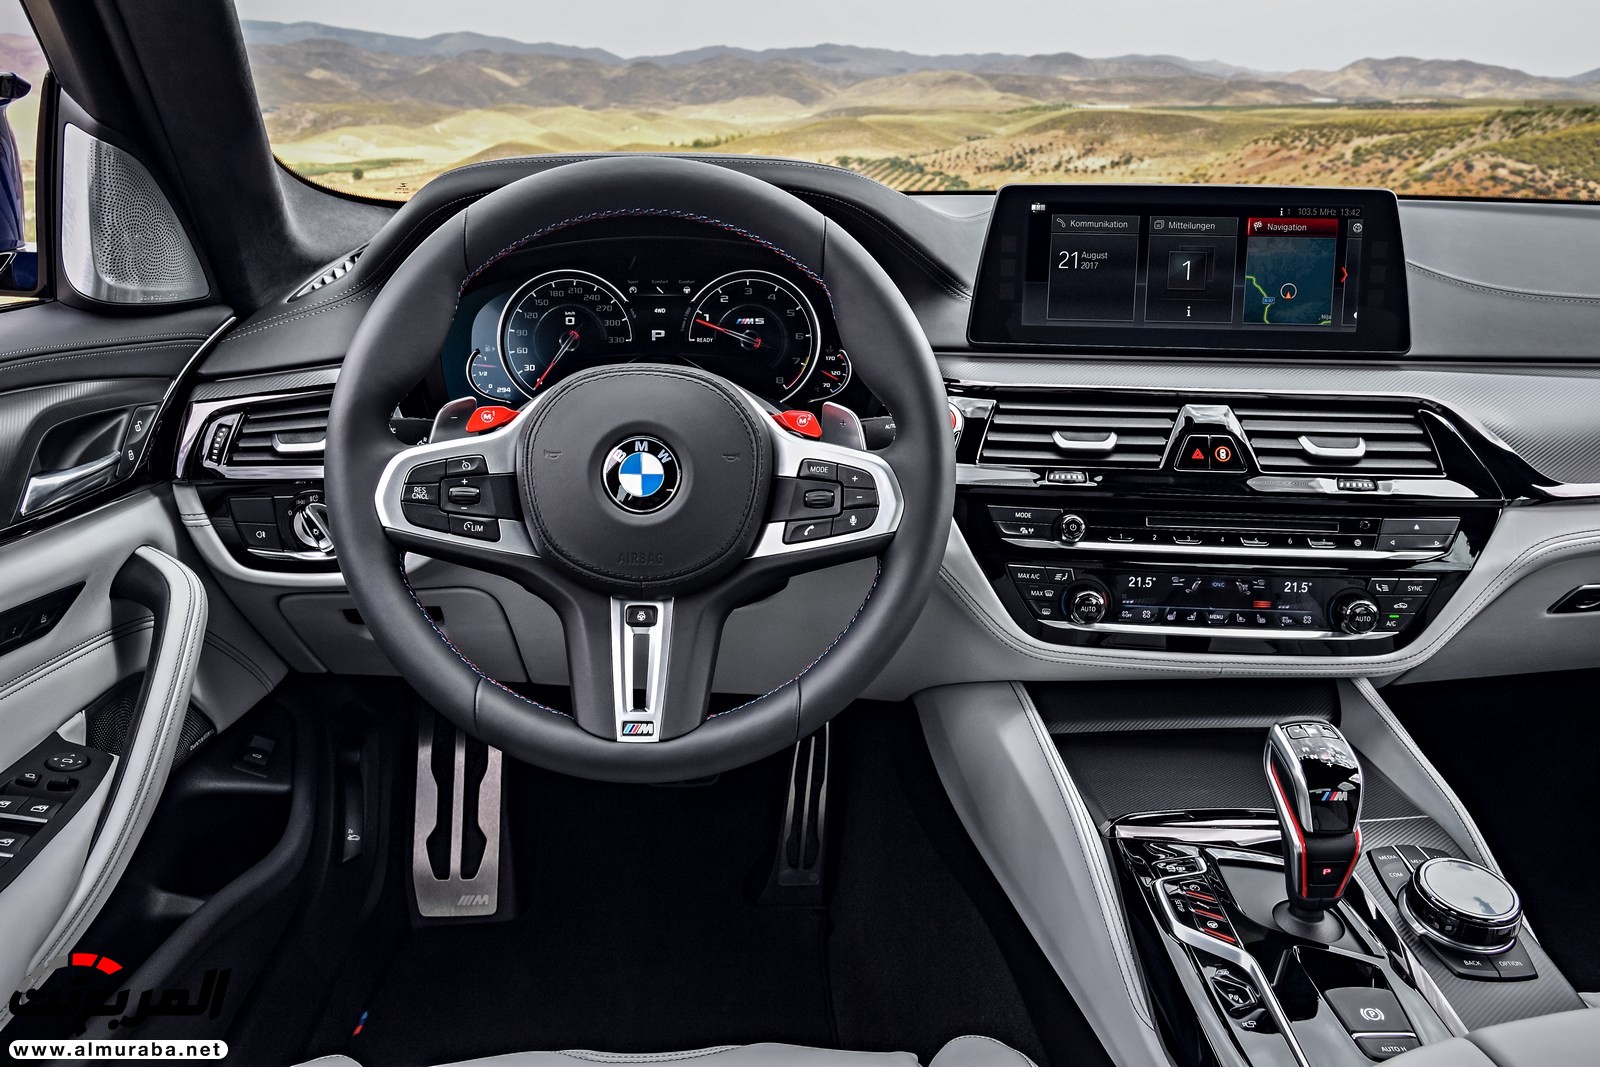 بي ام دبليو M5 2018 تكشف نفسها رسمياً بقوة ٦٠٠ حصان "صور ومواصفات" BMW 51